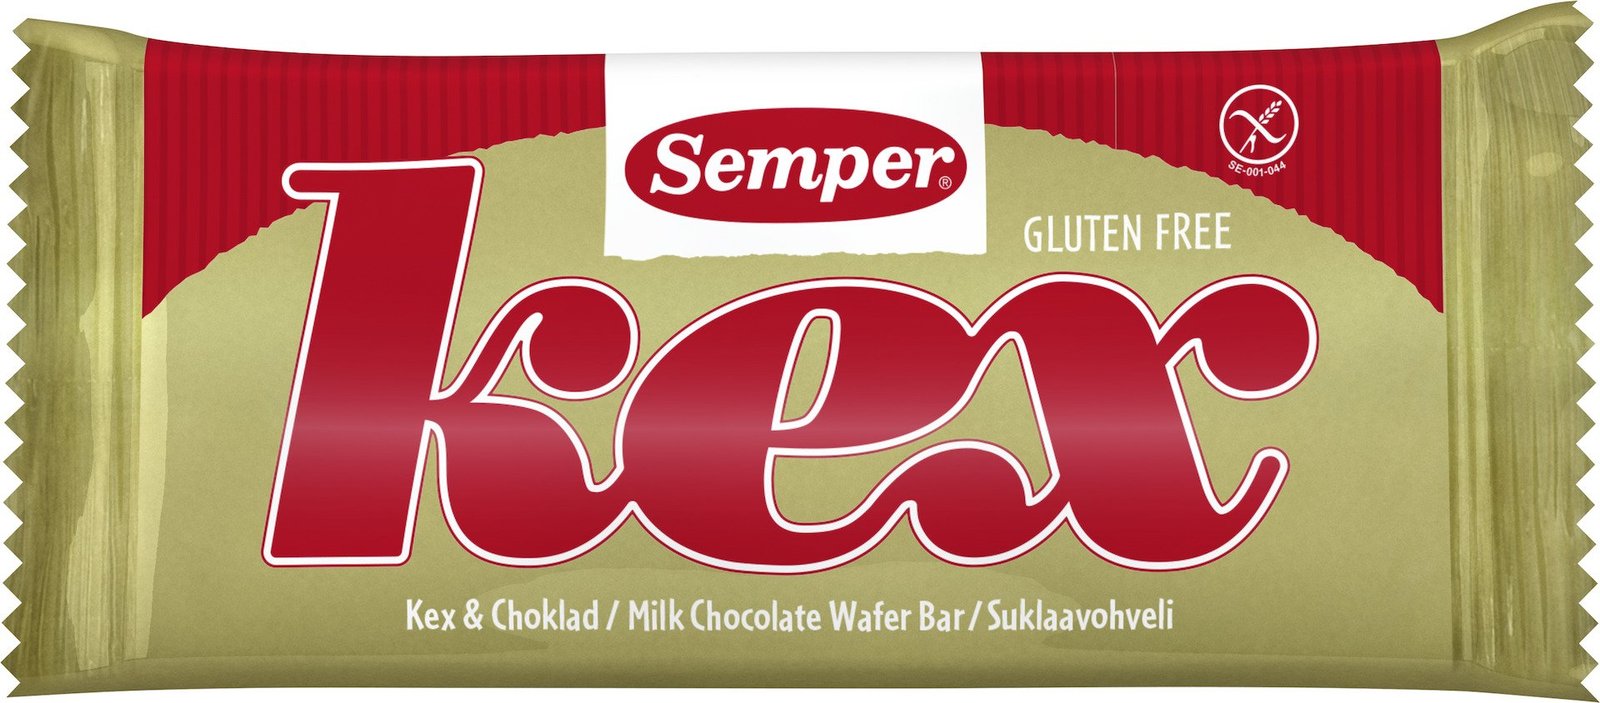 Semper Kex & Choklad Glutenfri 45 g